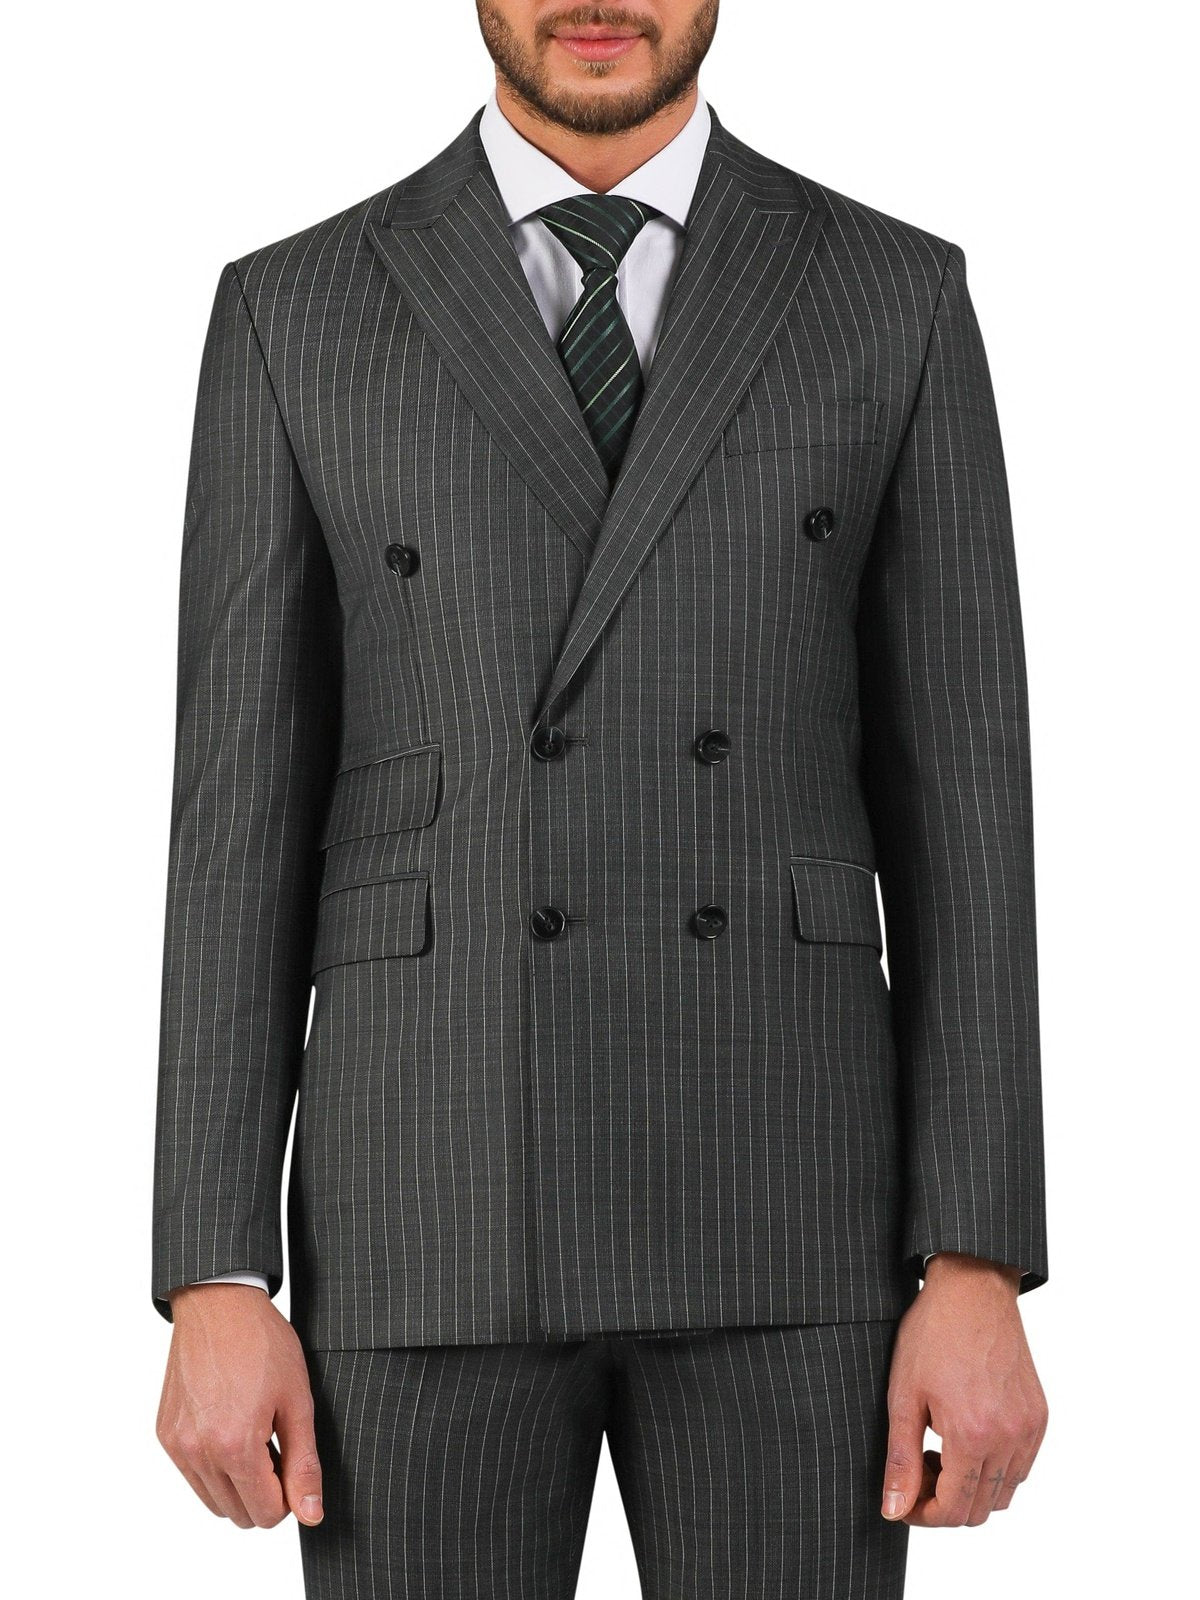 Di'nucci SUITS Di'nucci Gray With Light Blue Stripe Double Breasted Suit